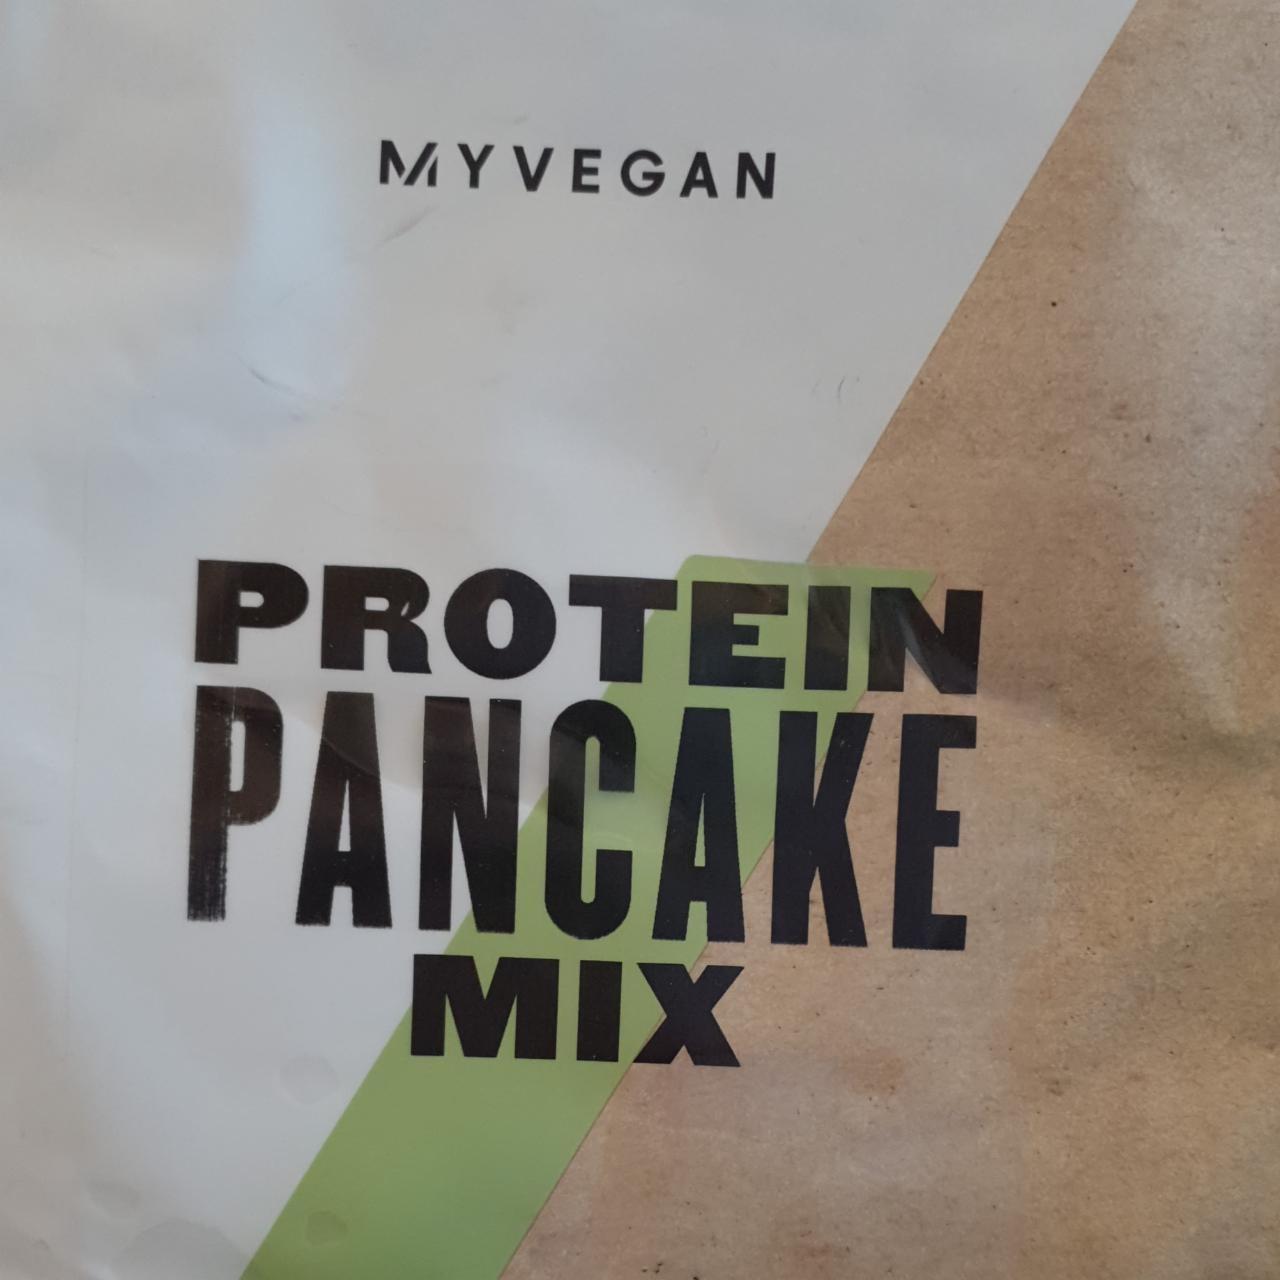 Képek - Protein pancake mix MyVegan